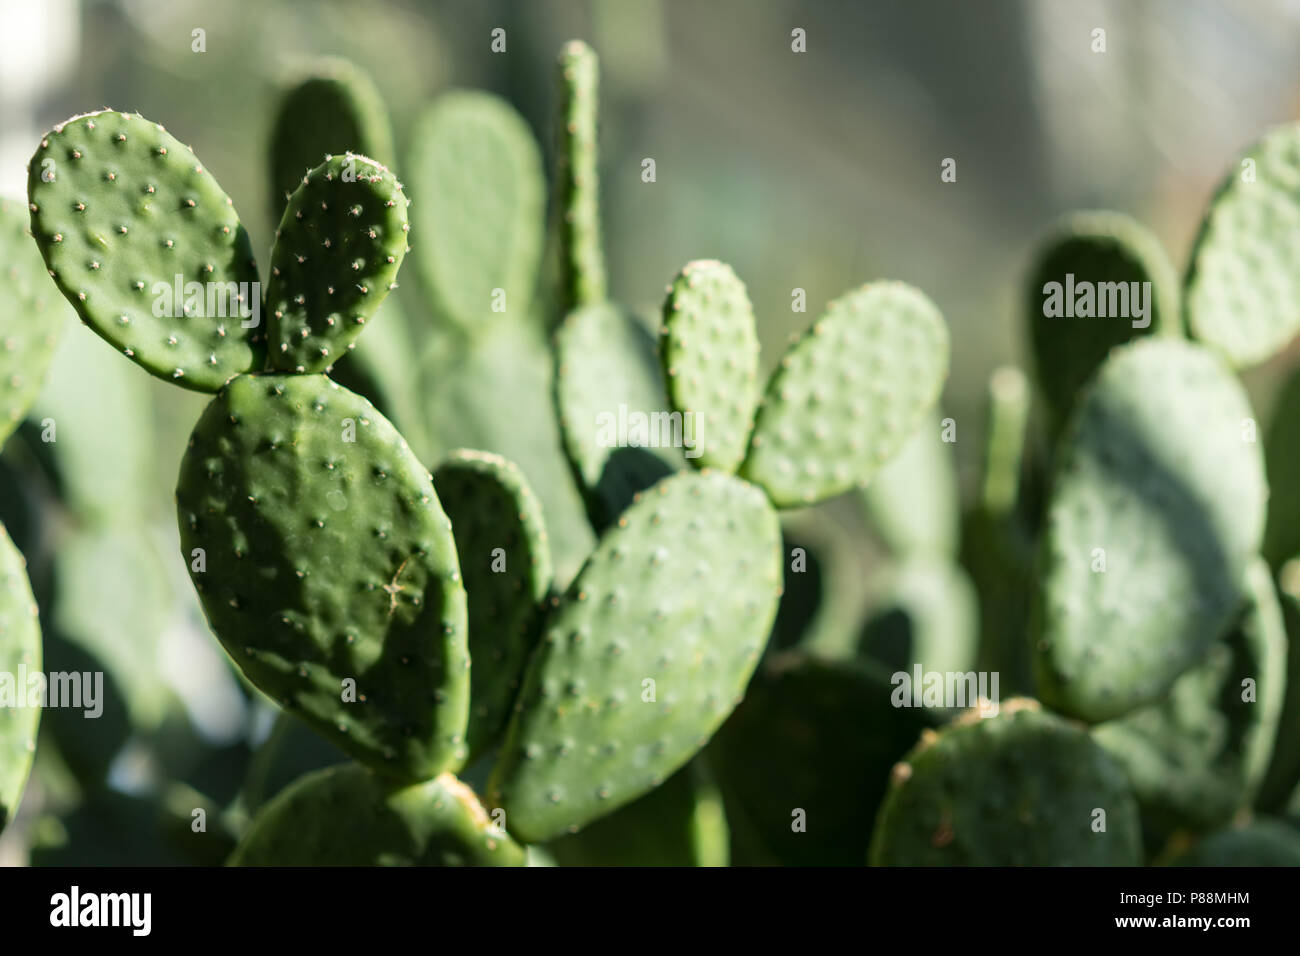 tacinga inamoena cactus succulent abstract design background structure Stock Photo